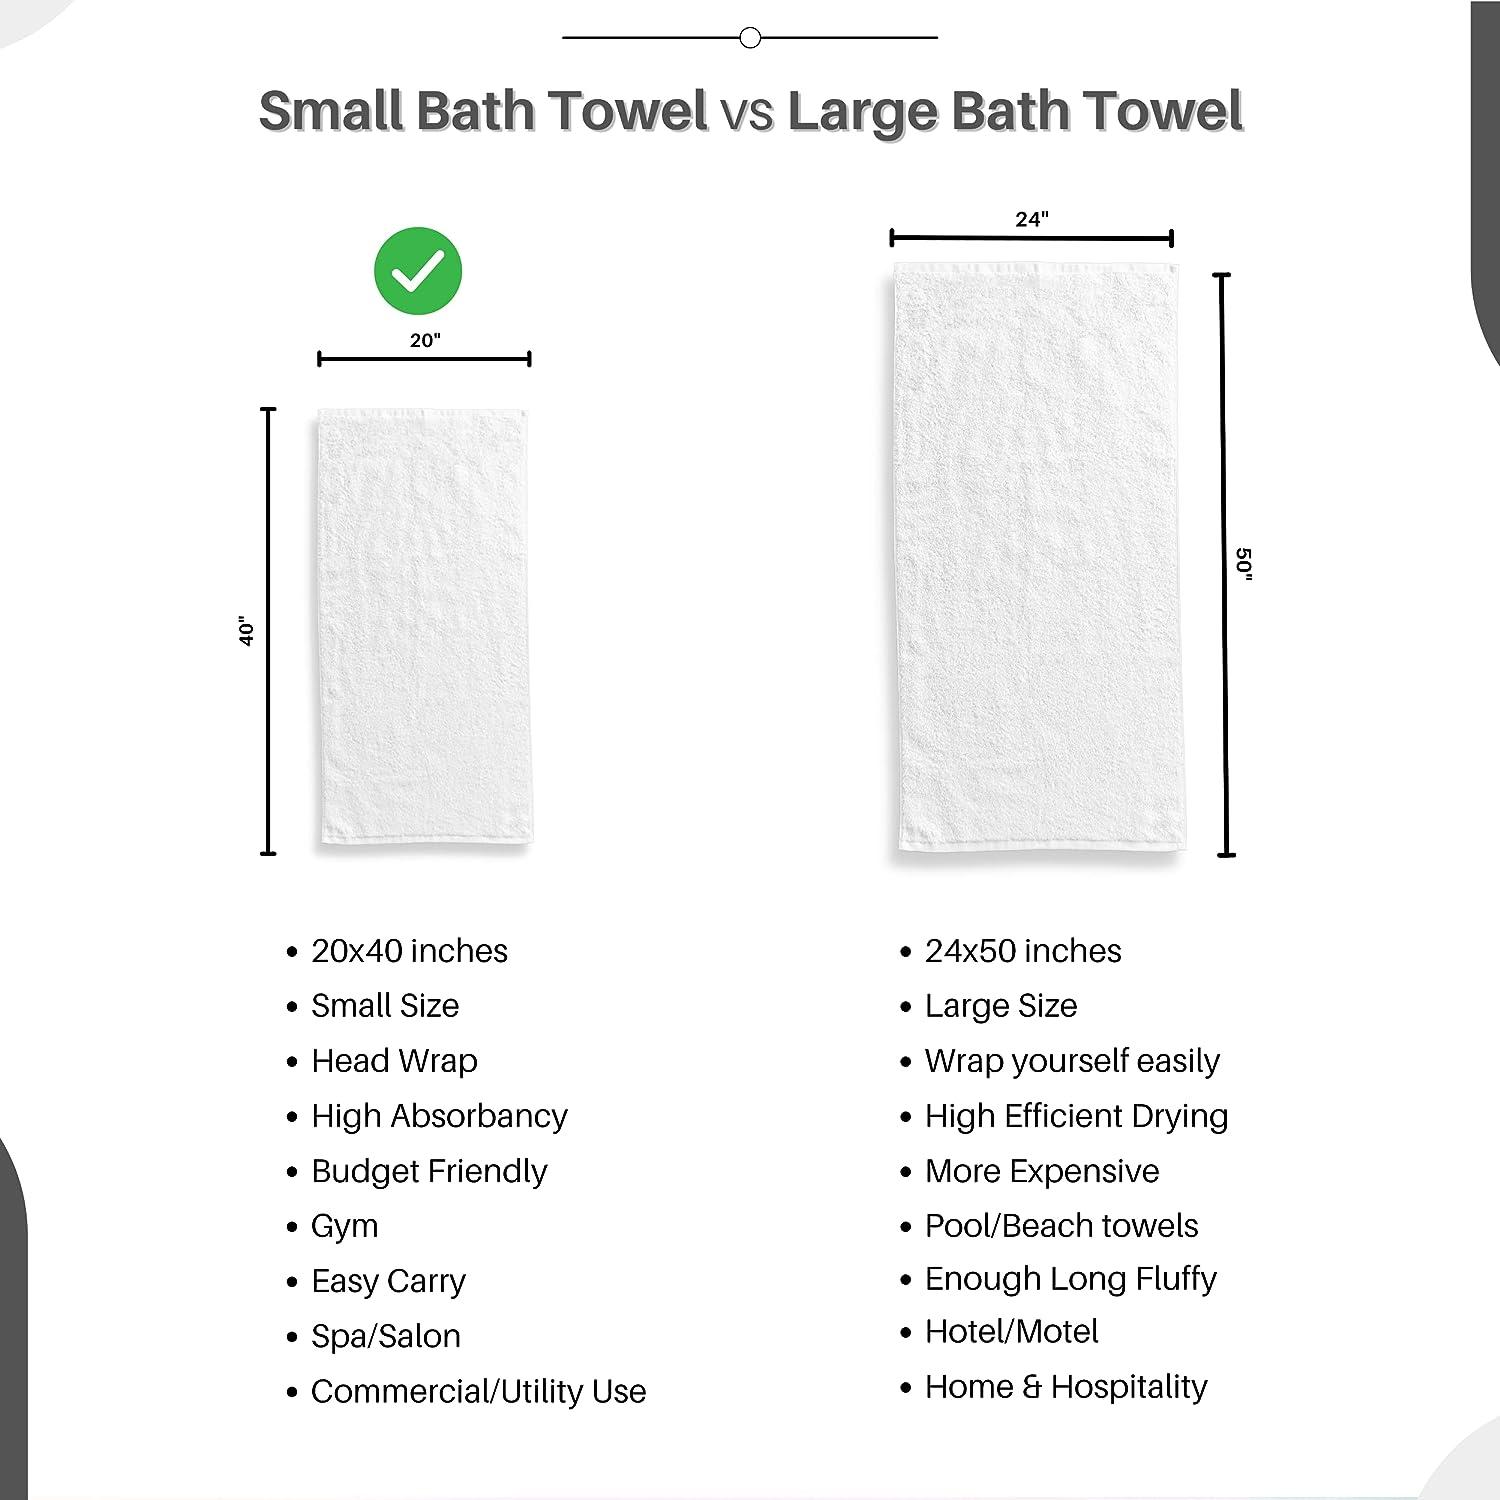 Utility Towel - 12 Pack